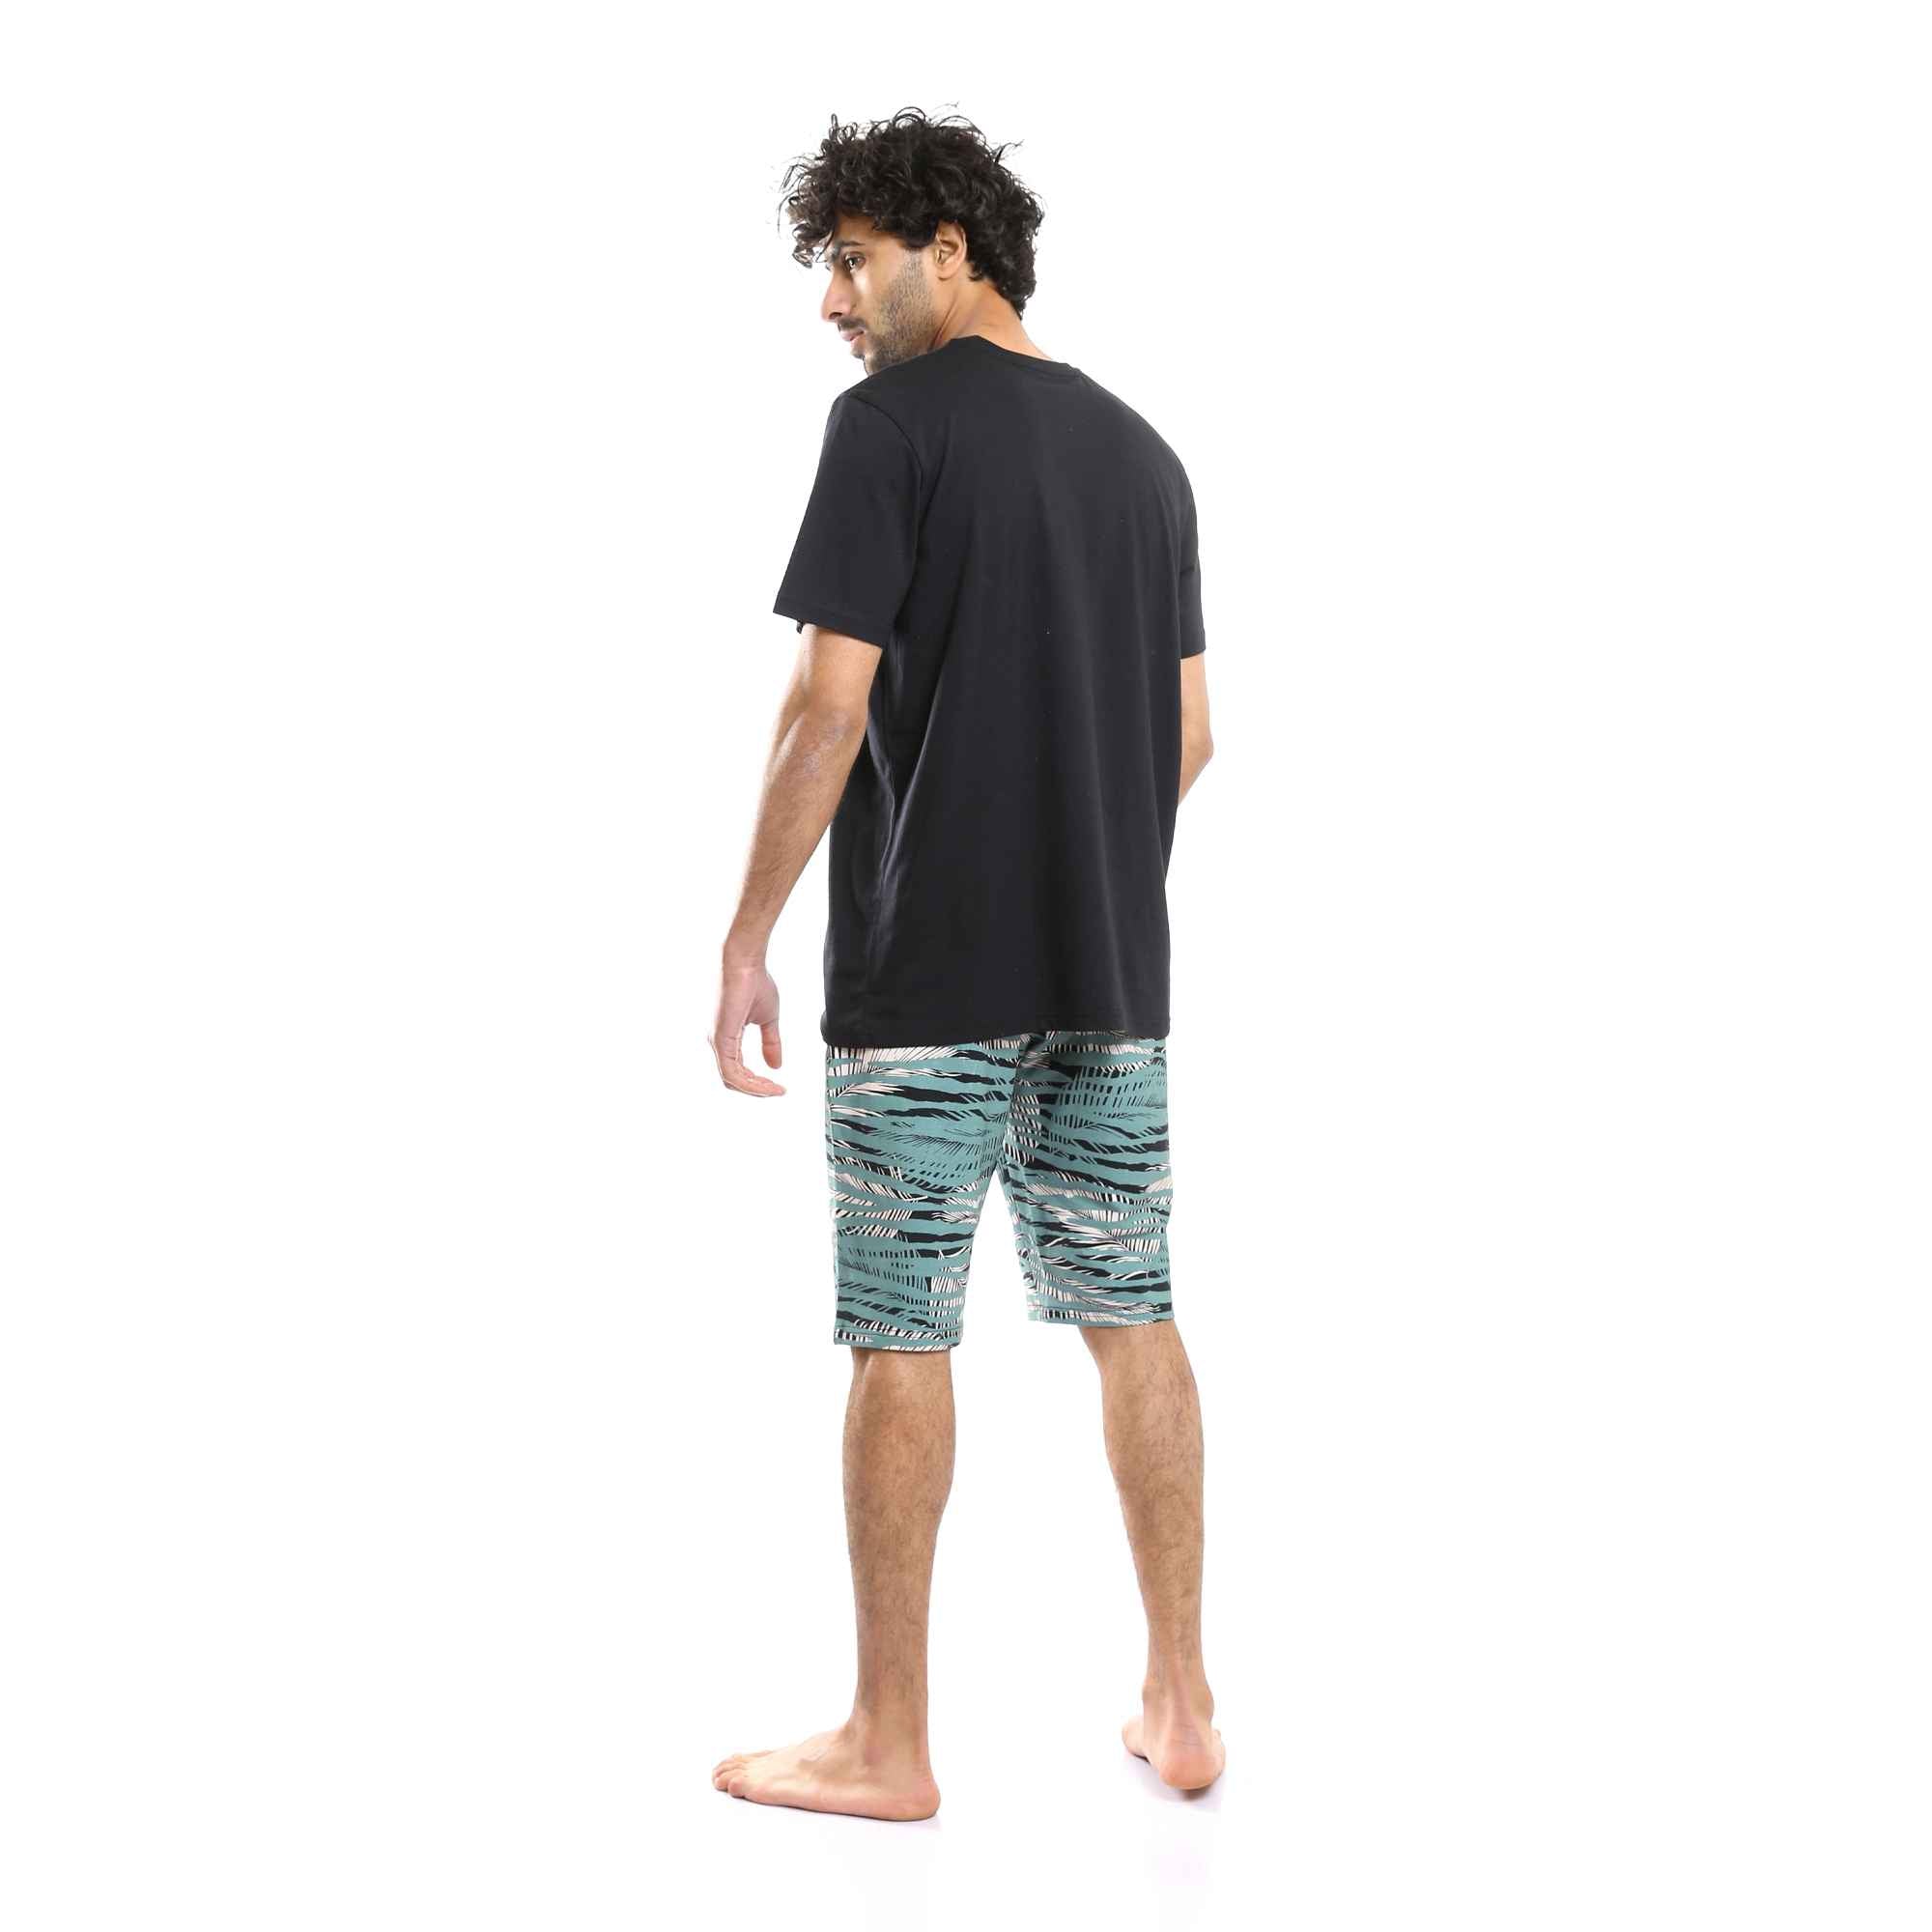 Printed Comfy T-Shirt & Palm Leaves Shorts Pajama Set - Black & Olive